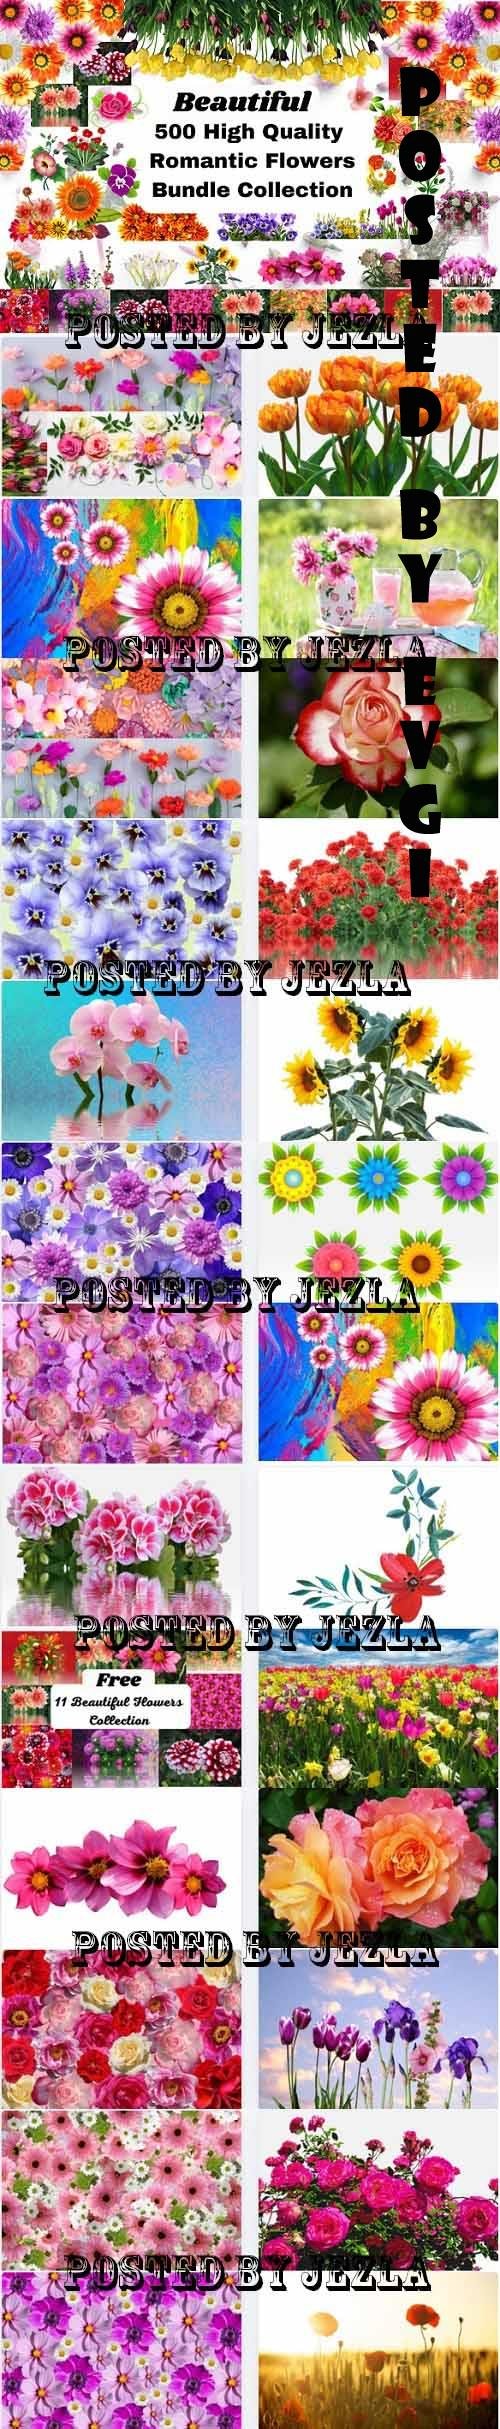 Romantic Flowers Bundle - 25 Premium Graphics